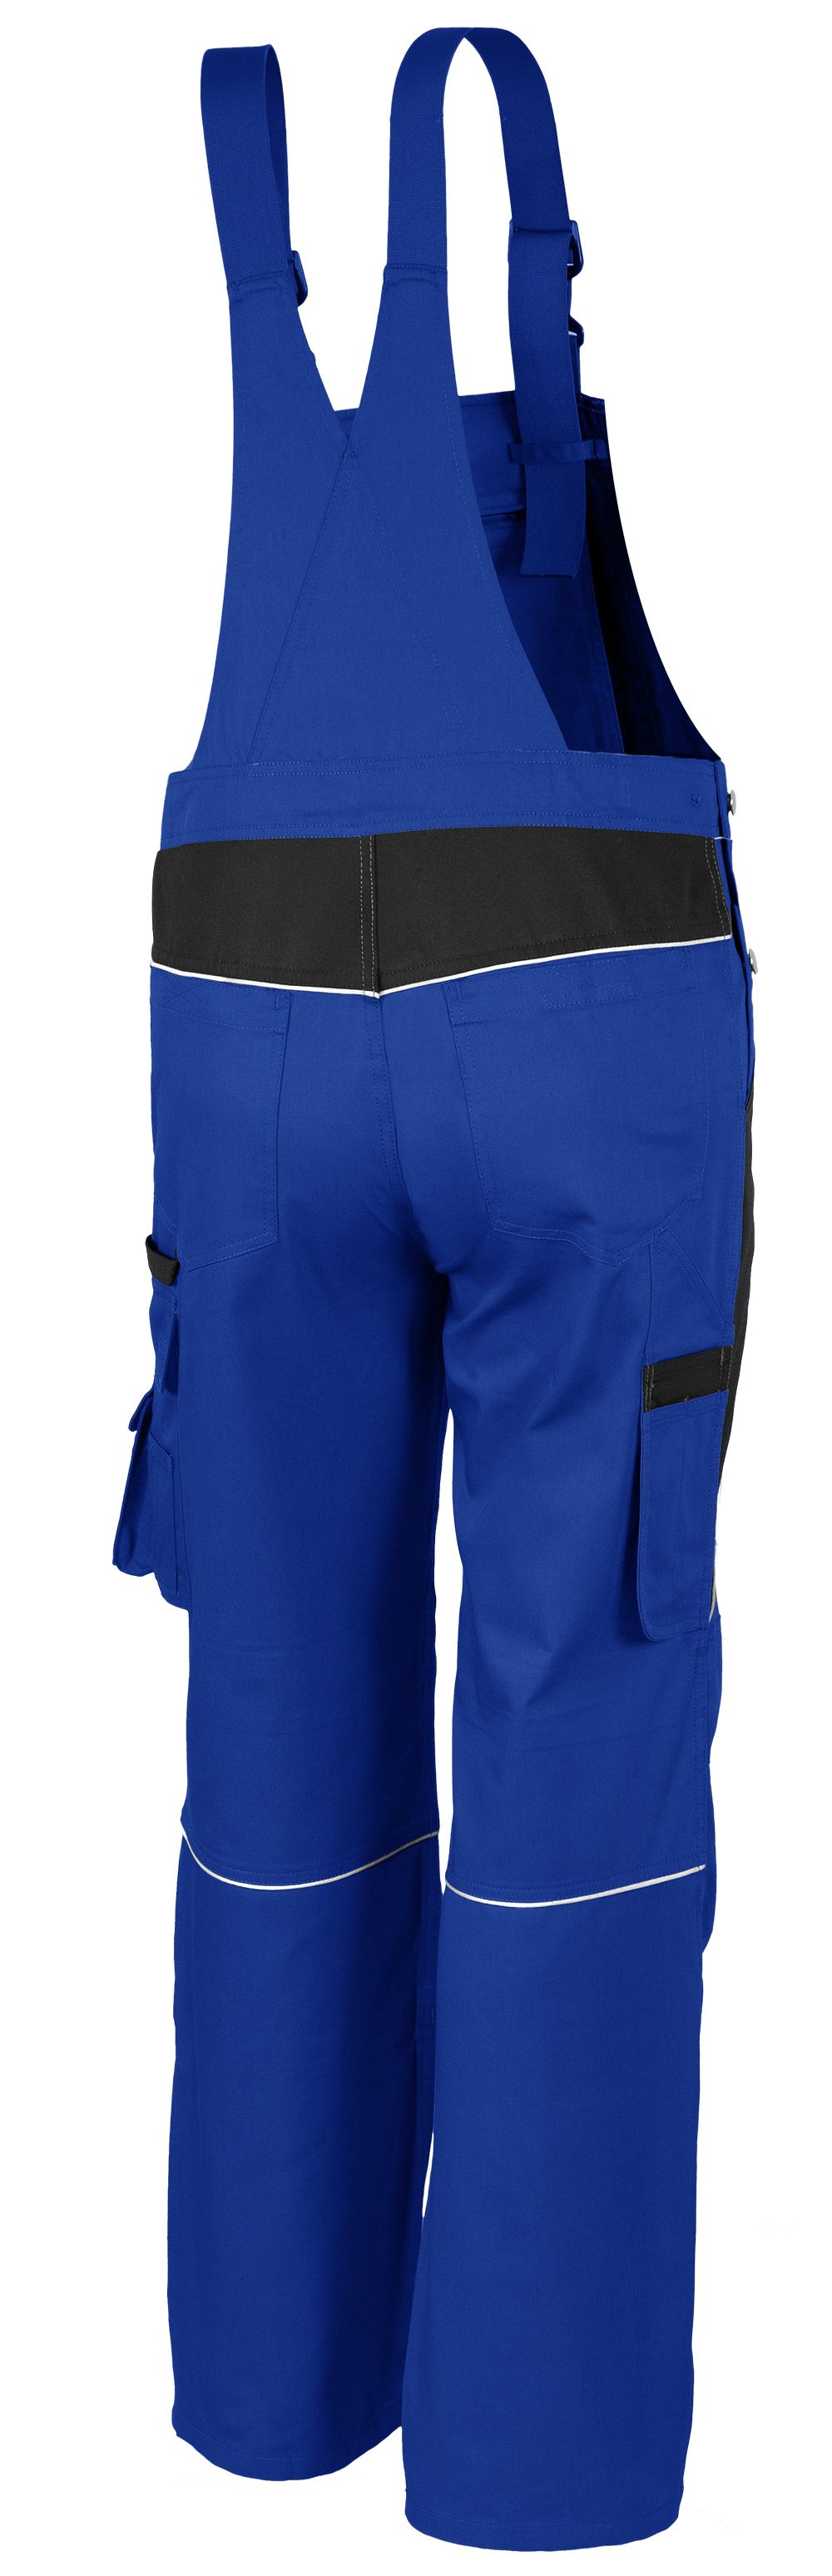 Shorts 2-farbig kornblau/schwarz PRO MG 245 TOP! QUALITEX® Latzhose Bundhose 